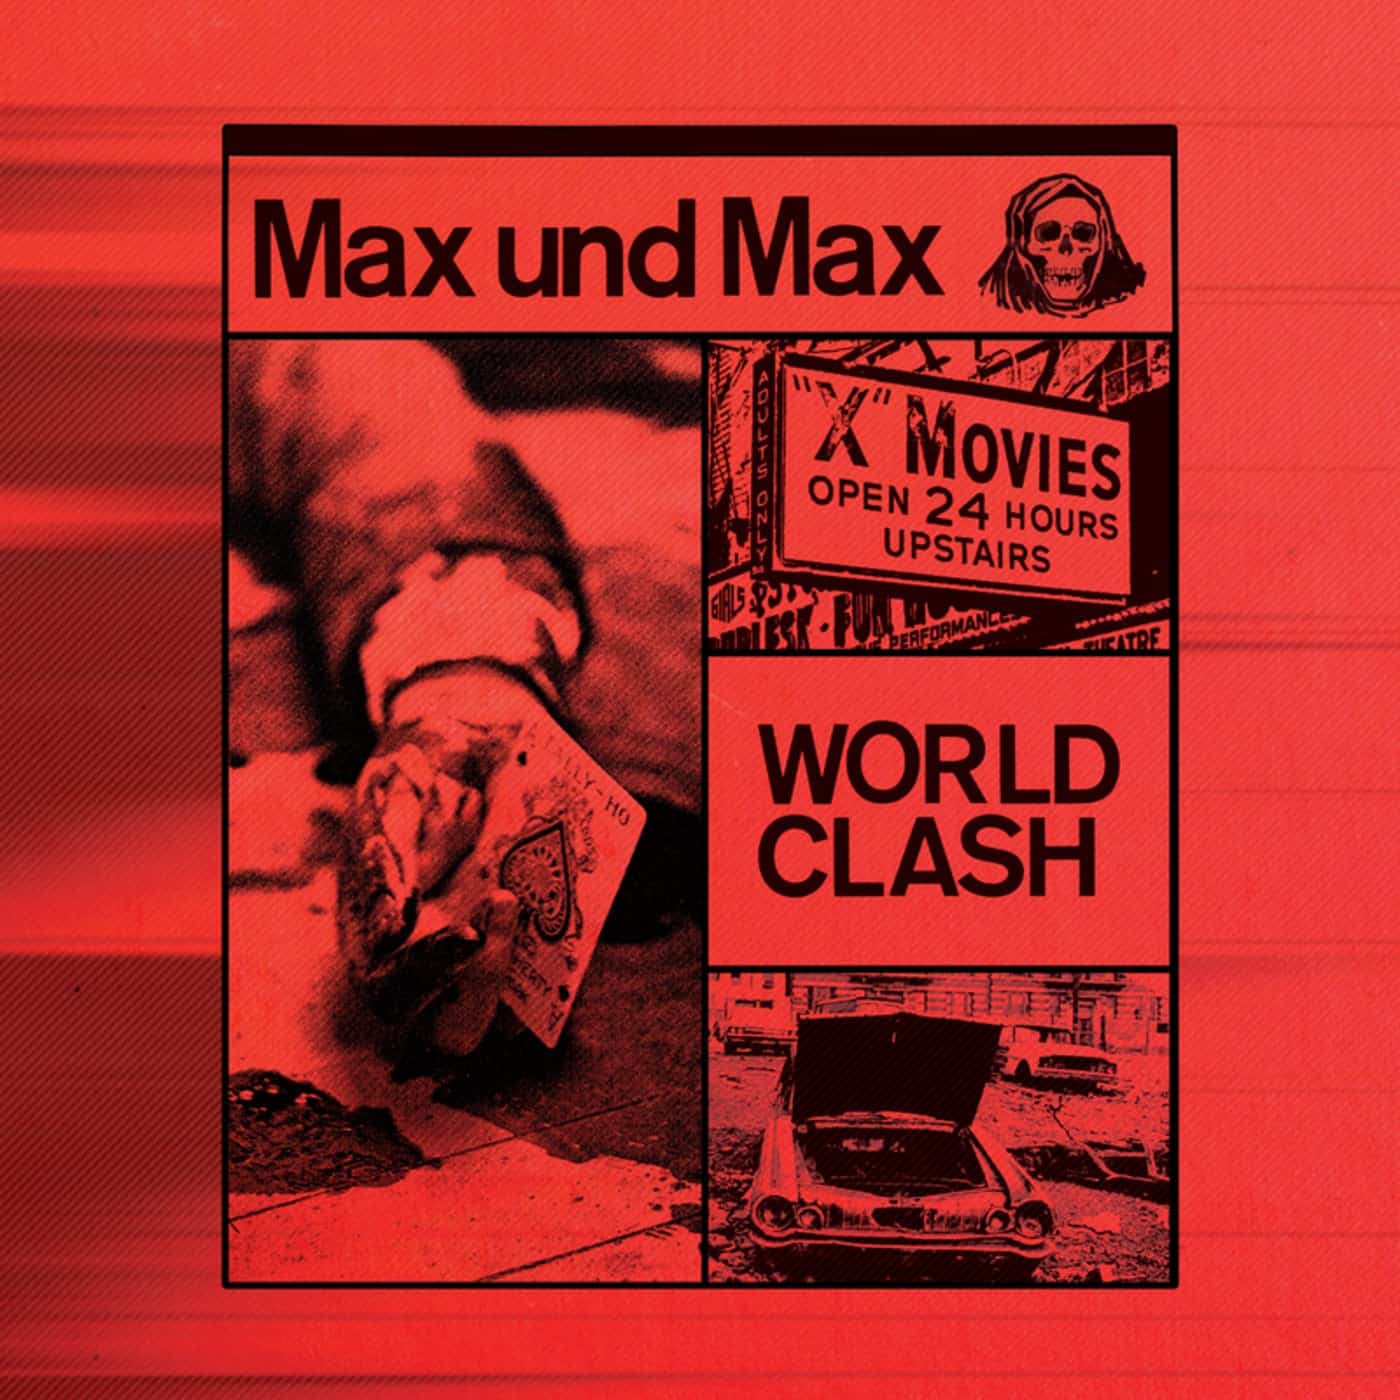 Download Max und Max - World Clash on Electrobuzz